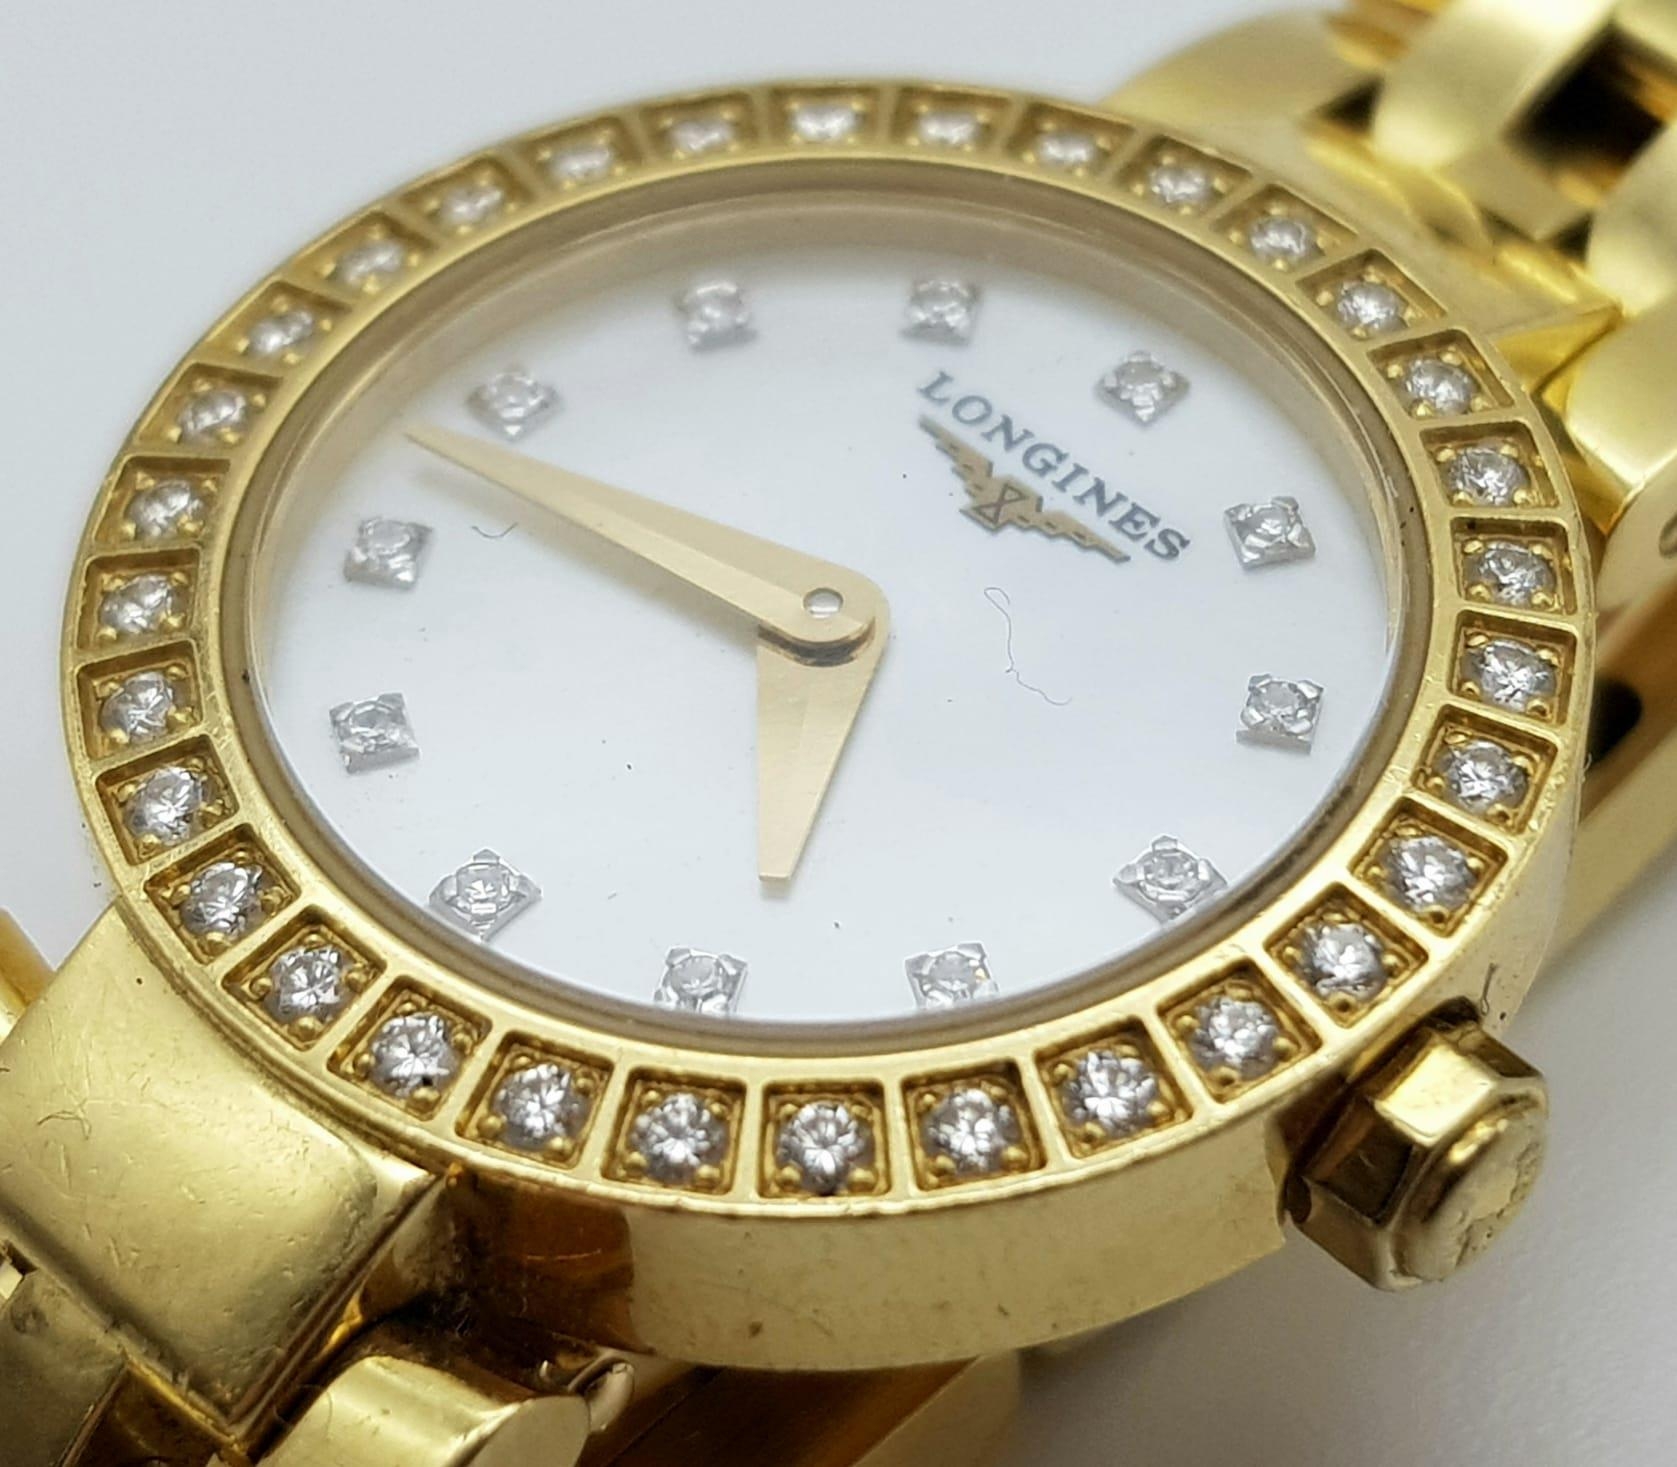 Longine ladies watch 18k diamond watch in original box and certificate. 54.3 grams. 19mm. - Image 2 of 7